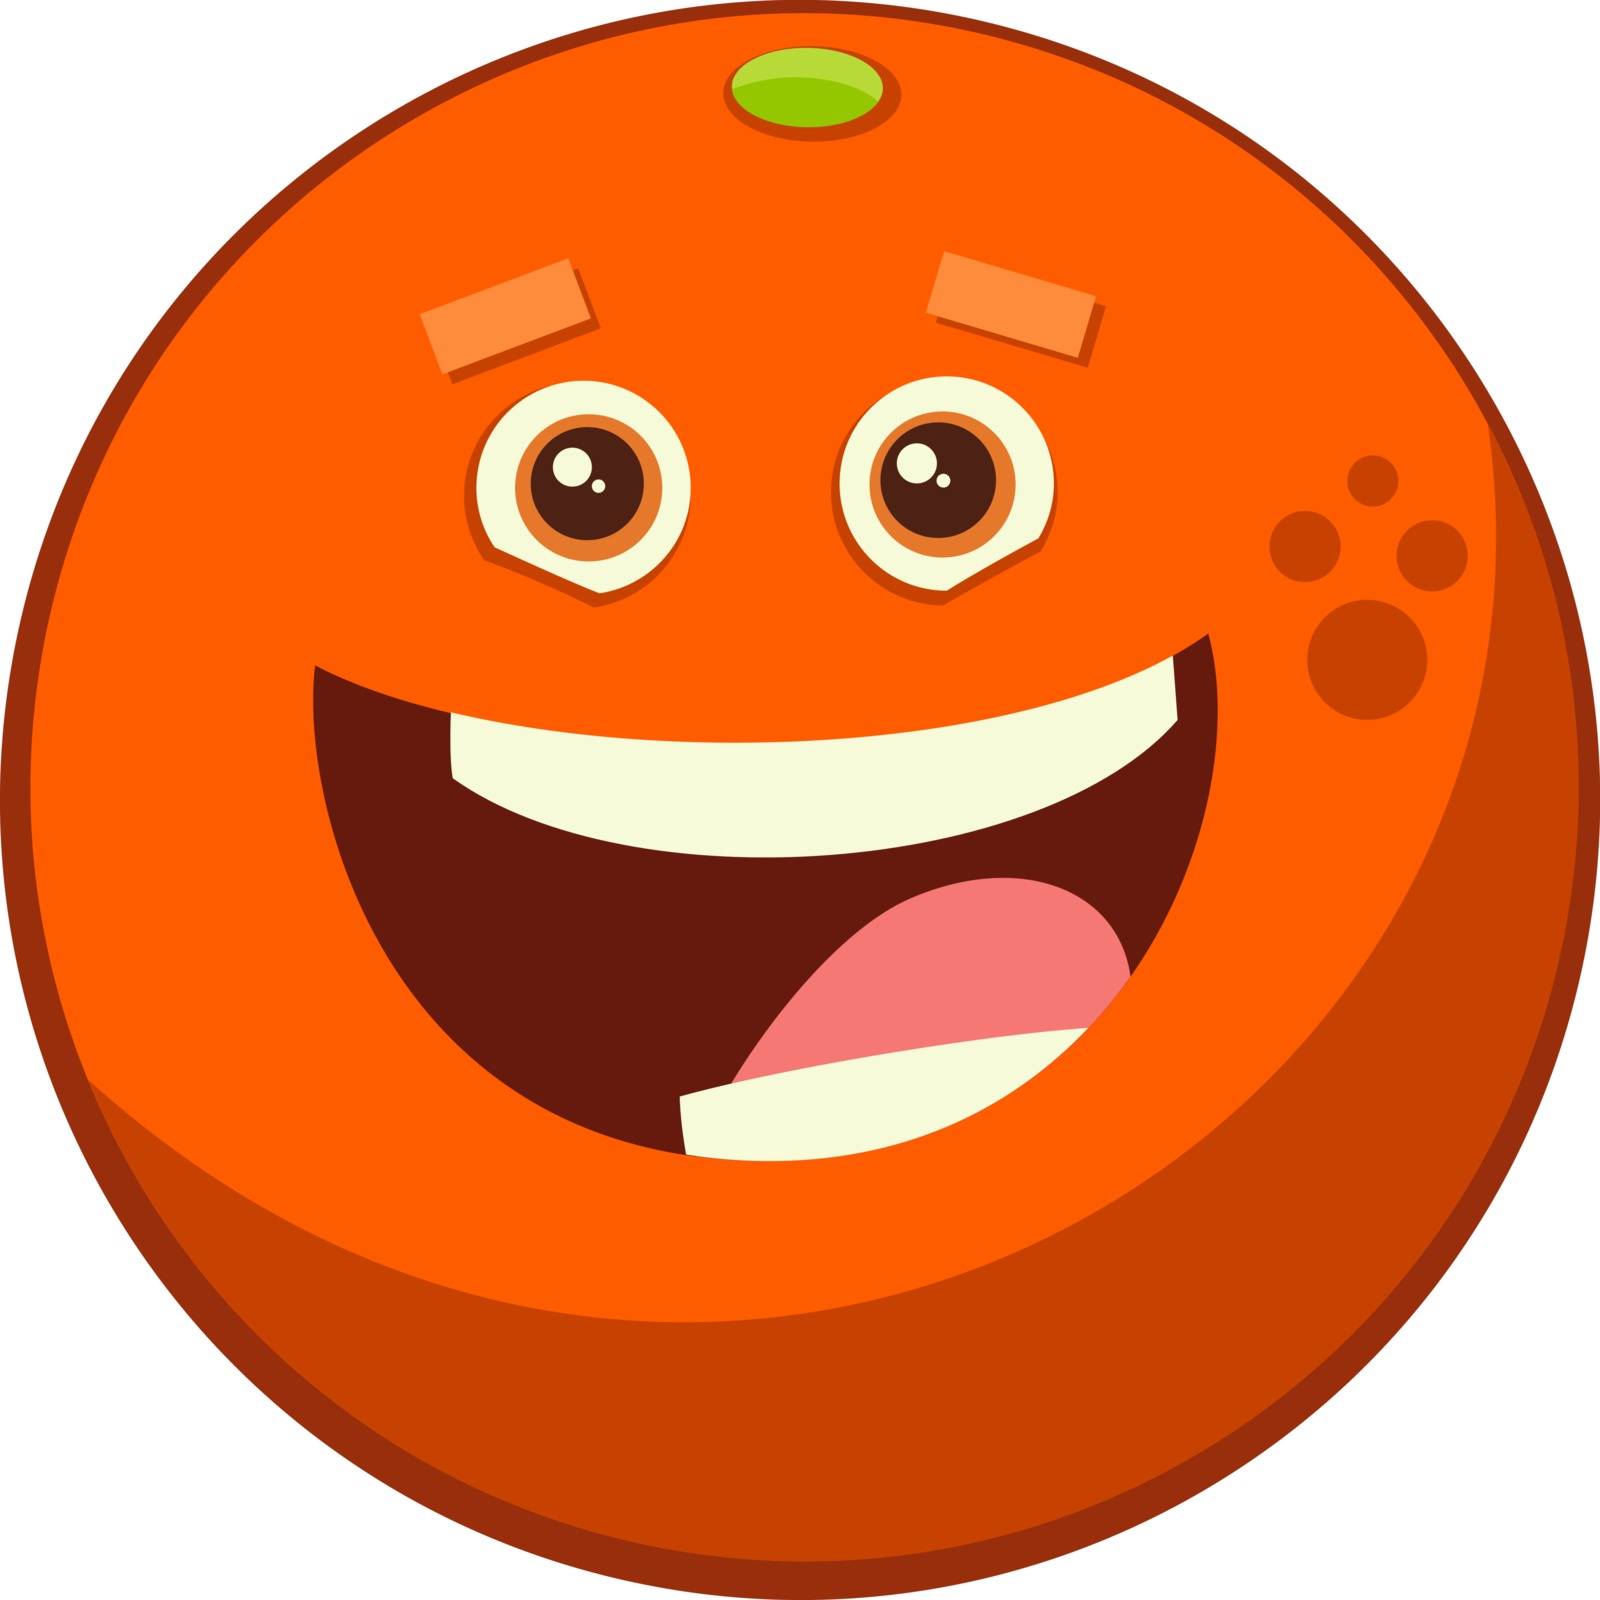 Cartoon Illustration of Orange Citrus Fruit Food Object Character